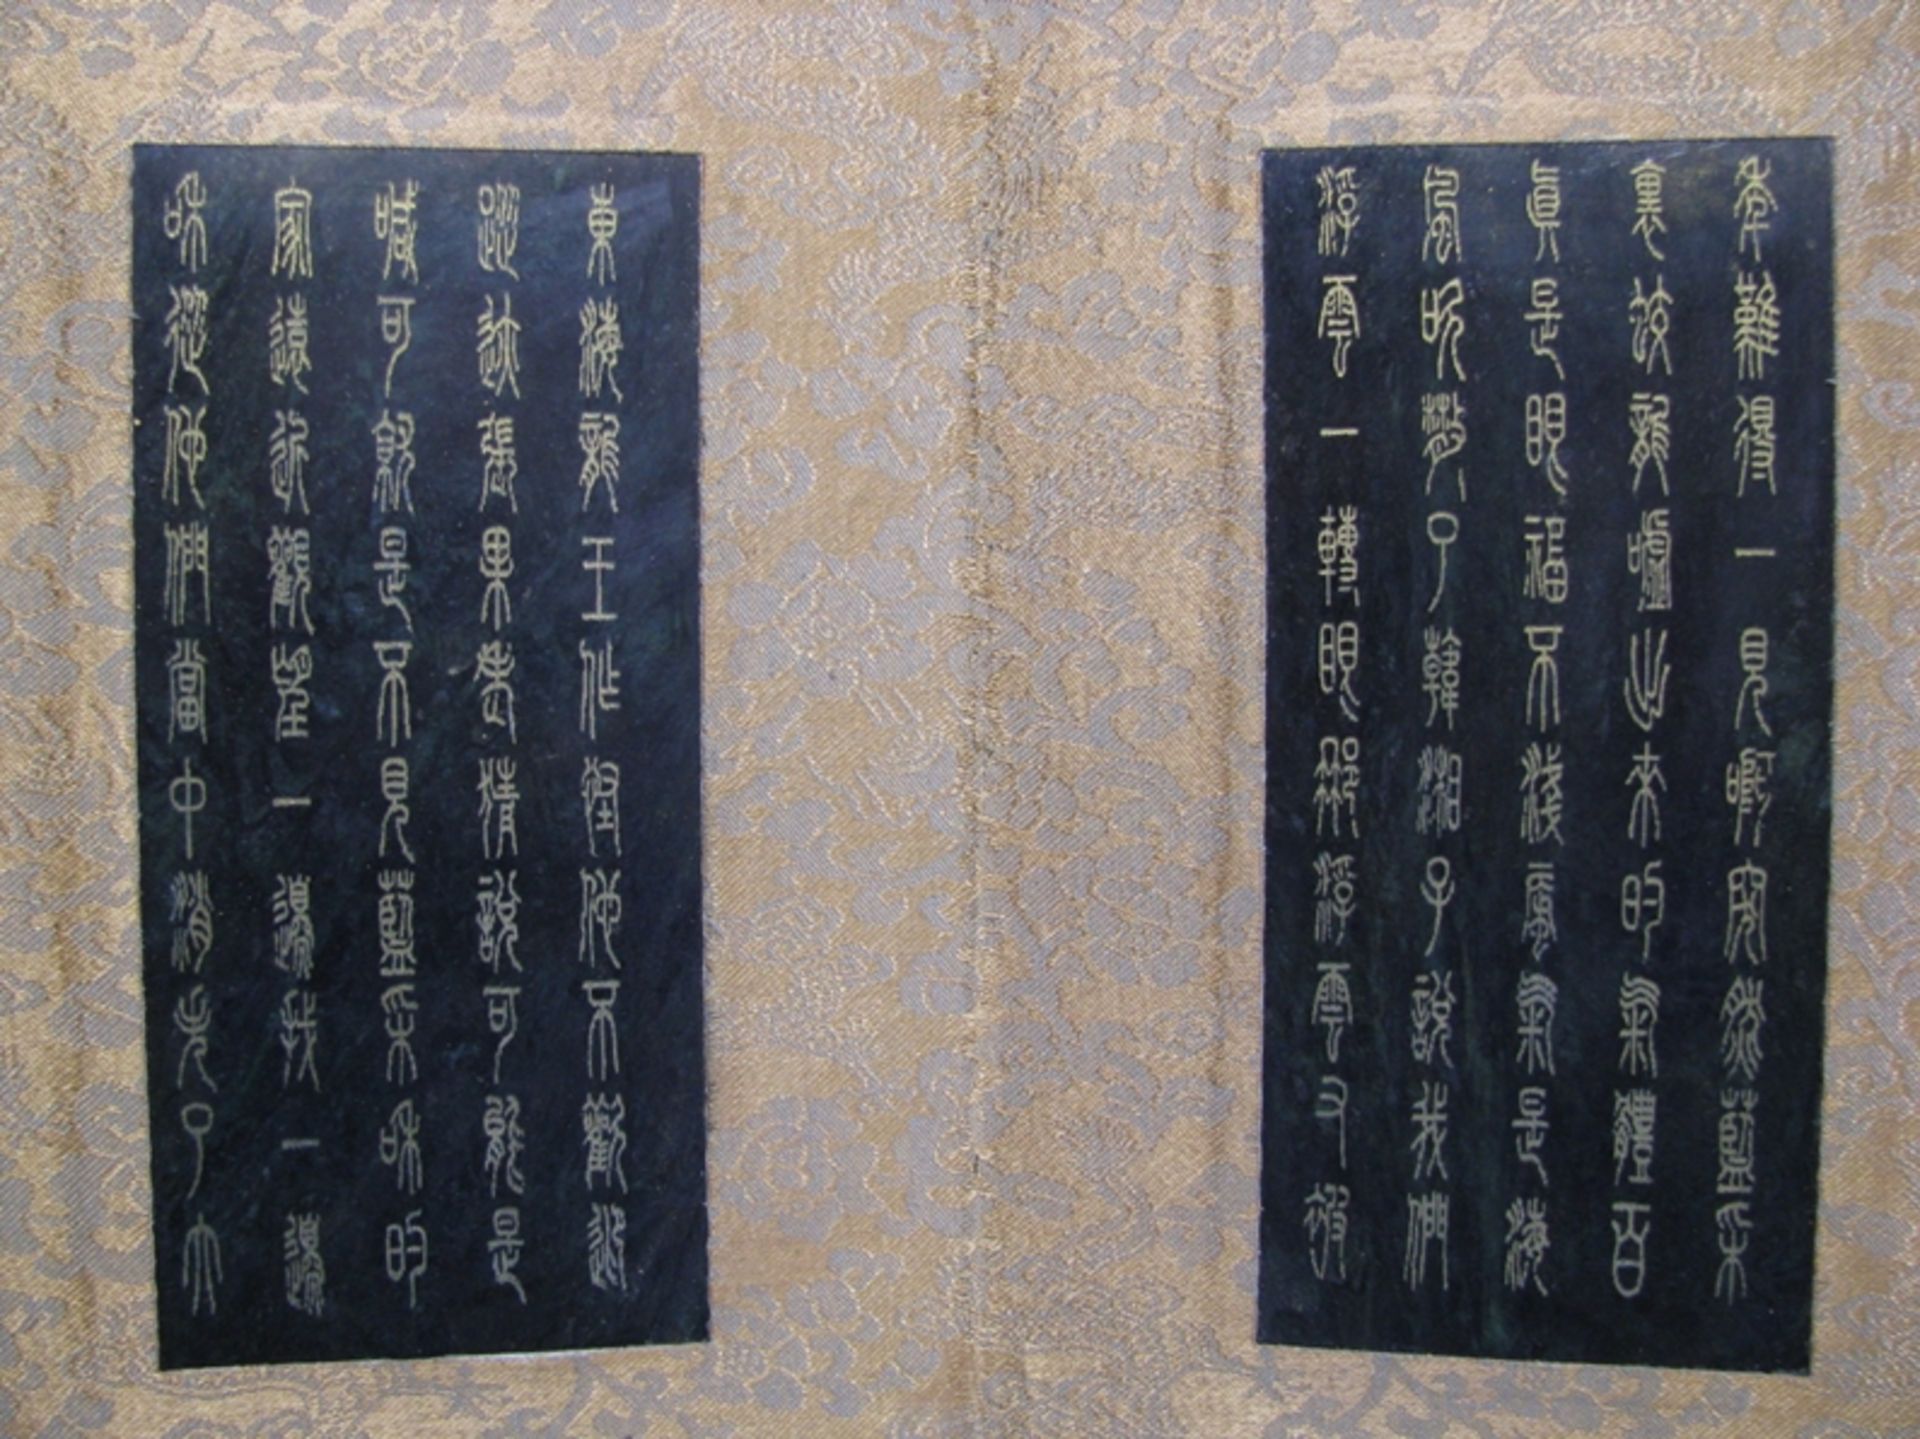 Buch mit 8 beschnitzten, dunklen Jade-Platten, China, Goldbemalung, 23 x 15 x 5 cm. - Bild 3 aus 4